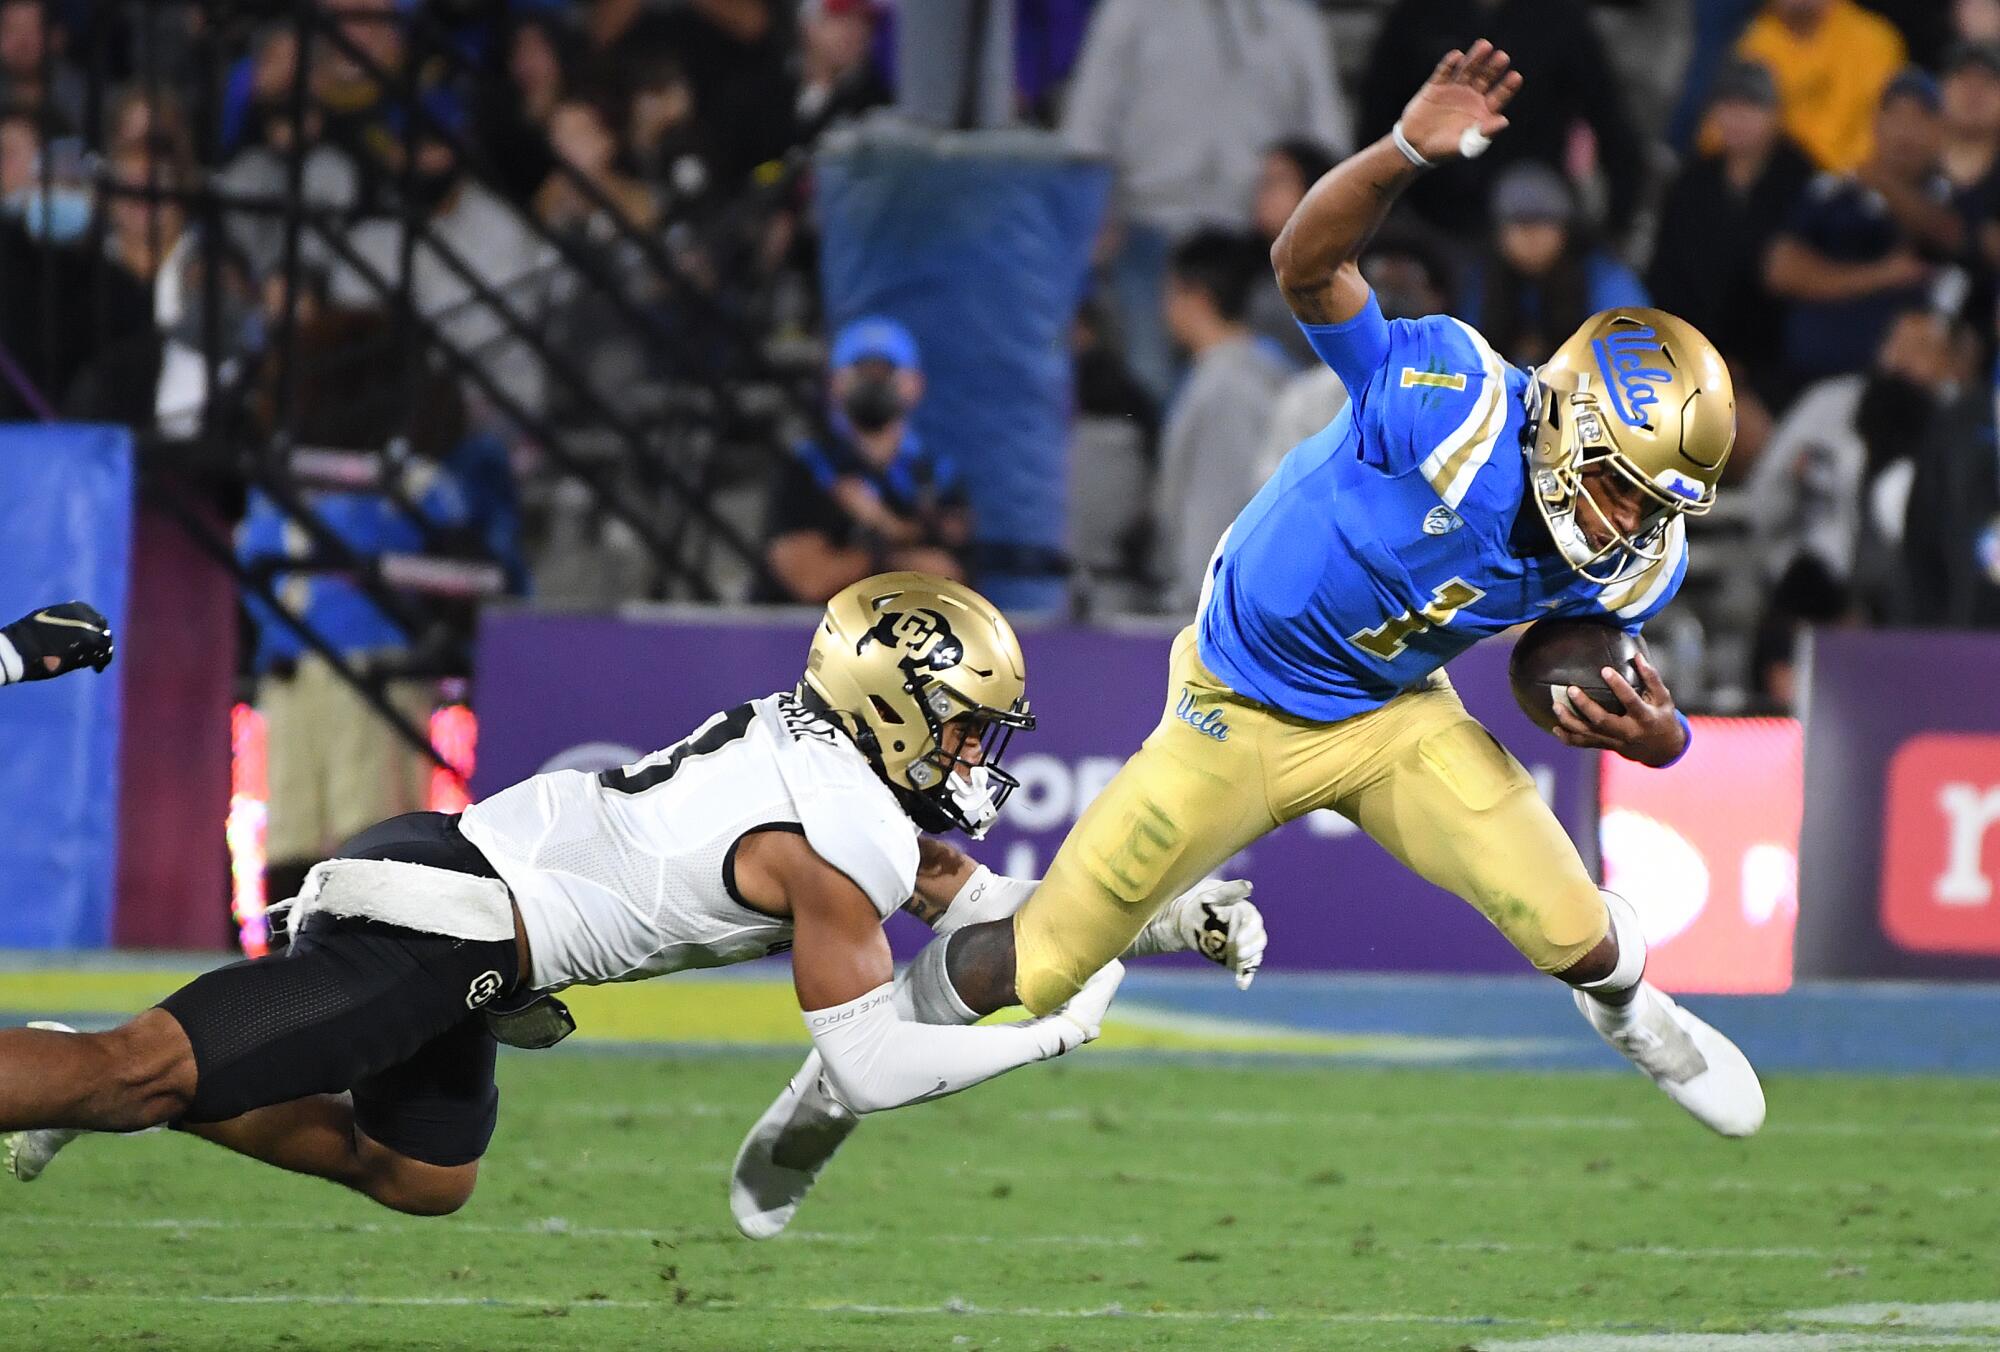  UCLA quarterback Dorian Thompson-Robinson is tackled for short gain.